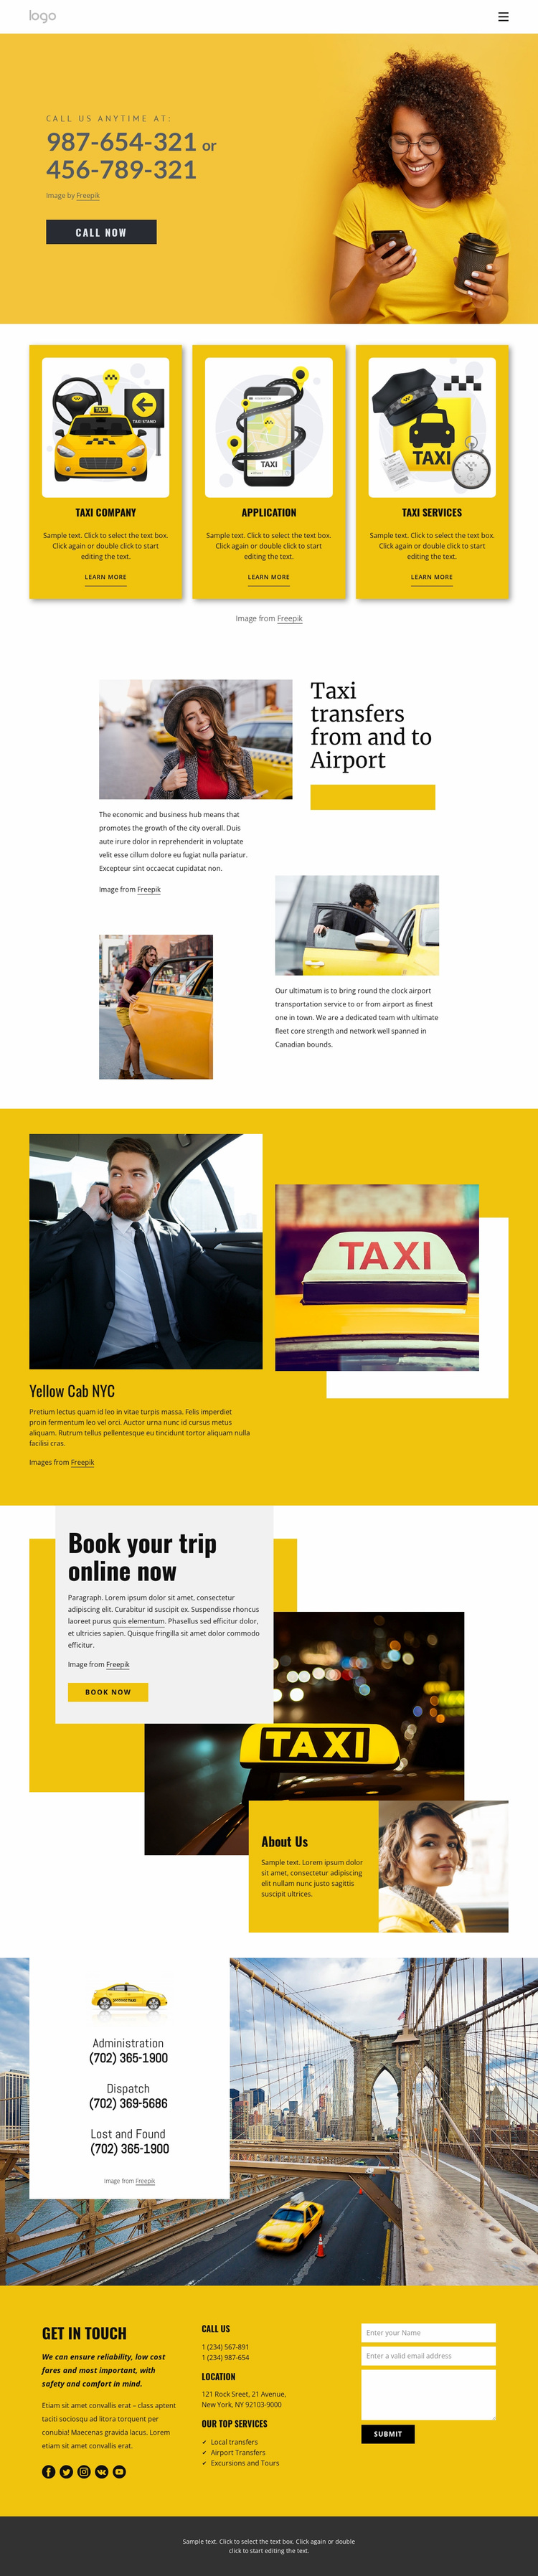 Quality taxi service Website Design